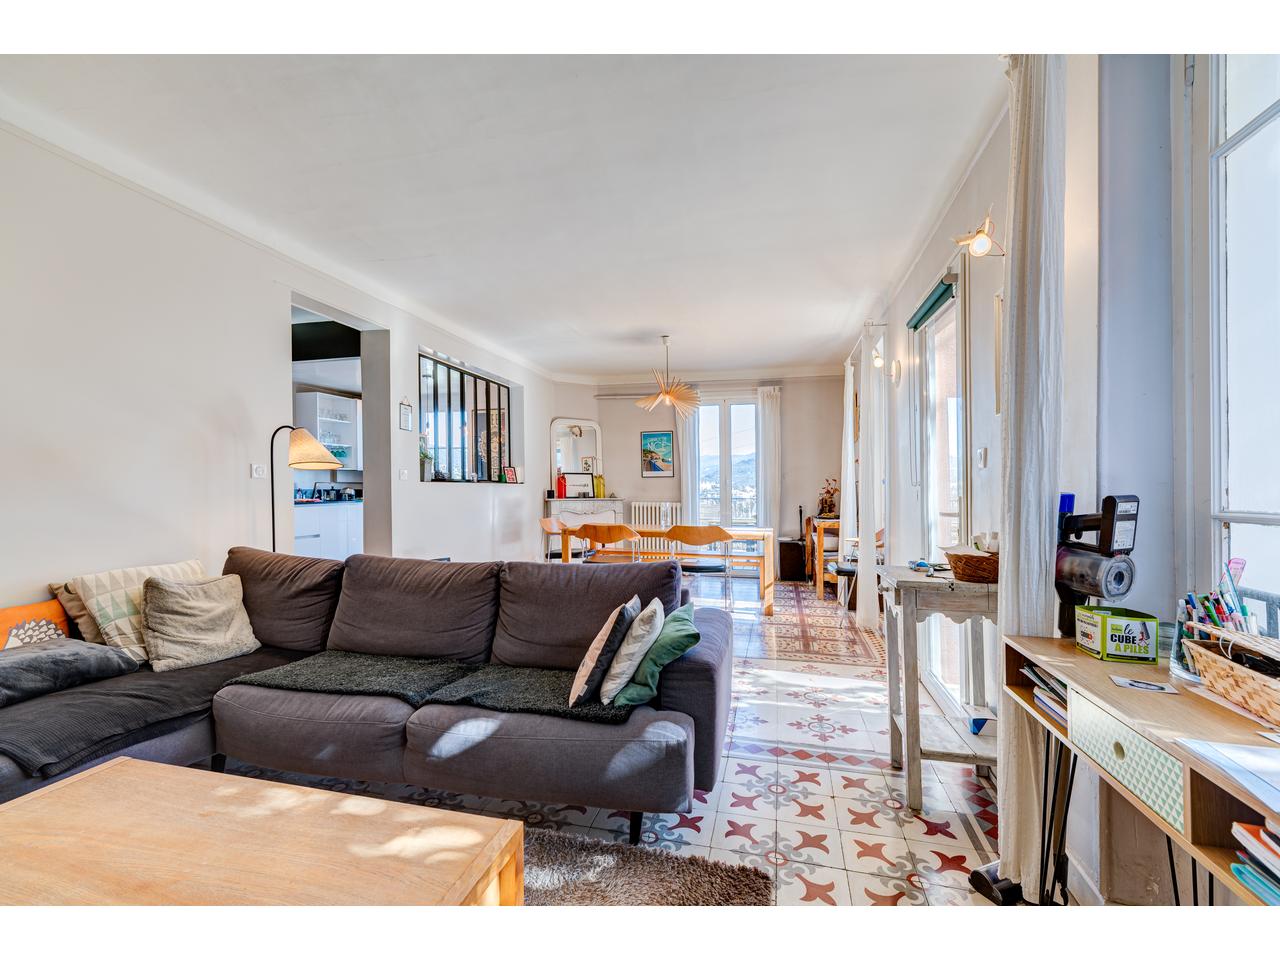 Nice Riviera - Agence Immobiliére Nice Côte d'Azur|Maison  4 Rooms 115m2  for sale   940 000 €